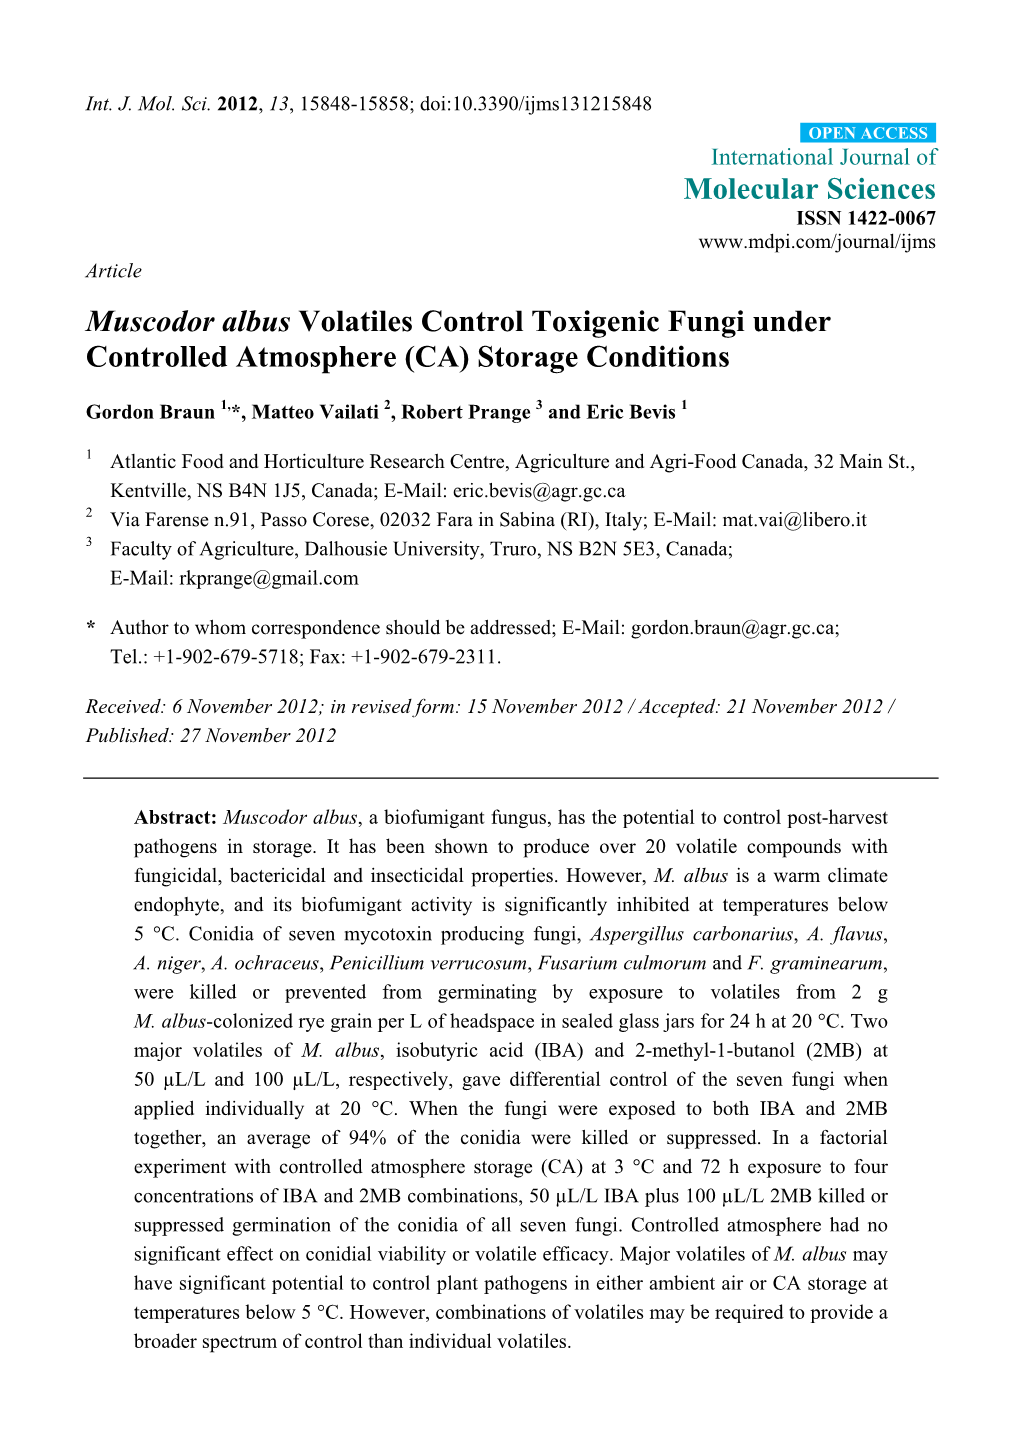 Muscodor Albus Volatiles Control Toxigenic Fungi Under Controlled Atmosphere (CA) Storage Conditions